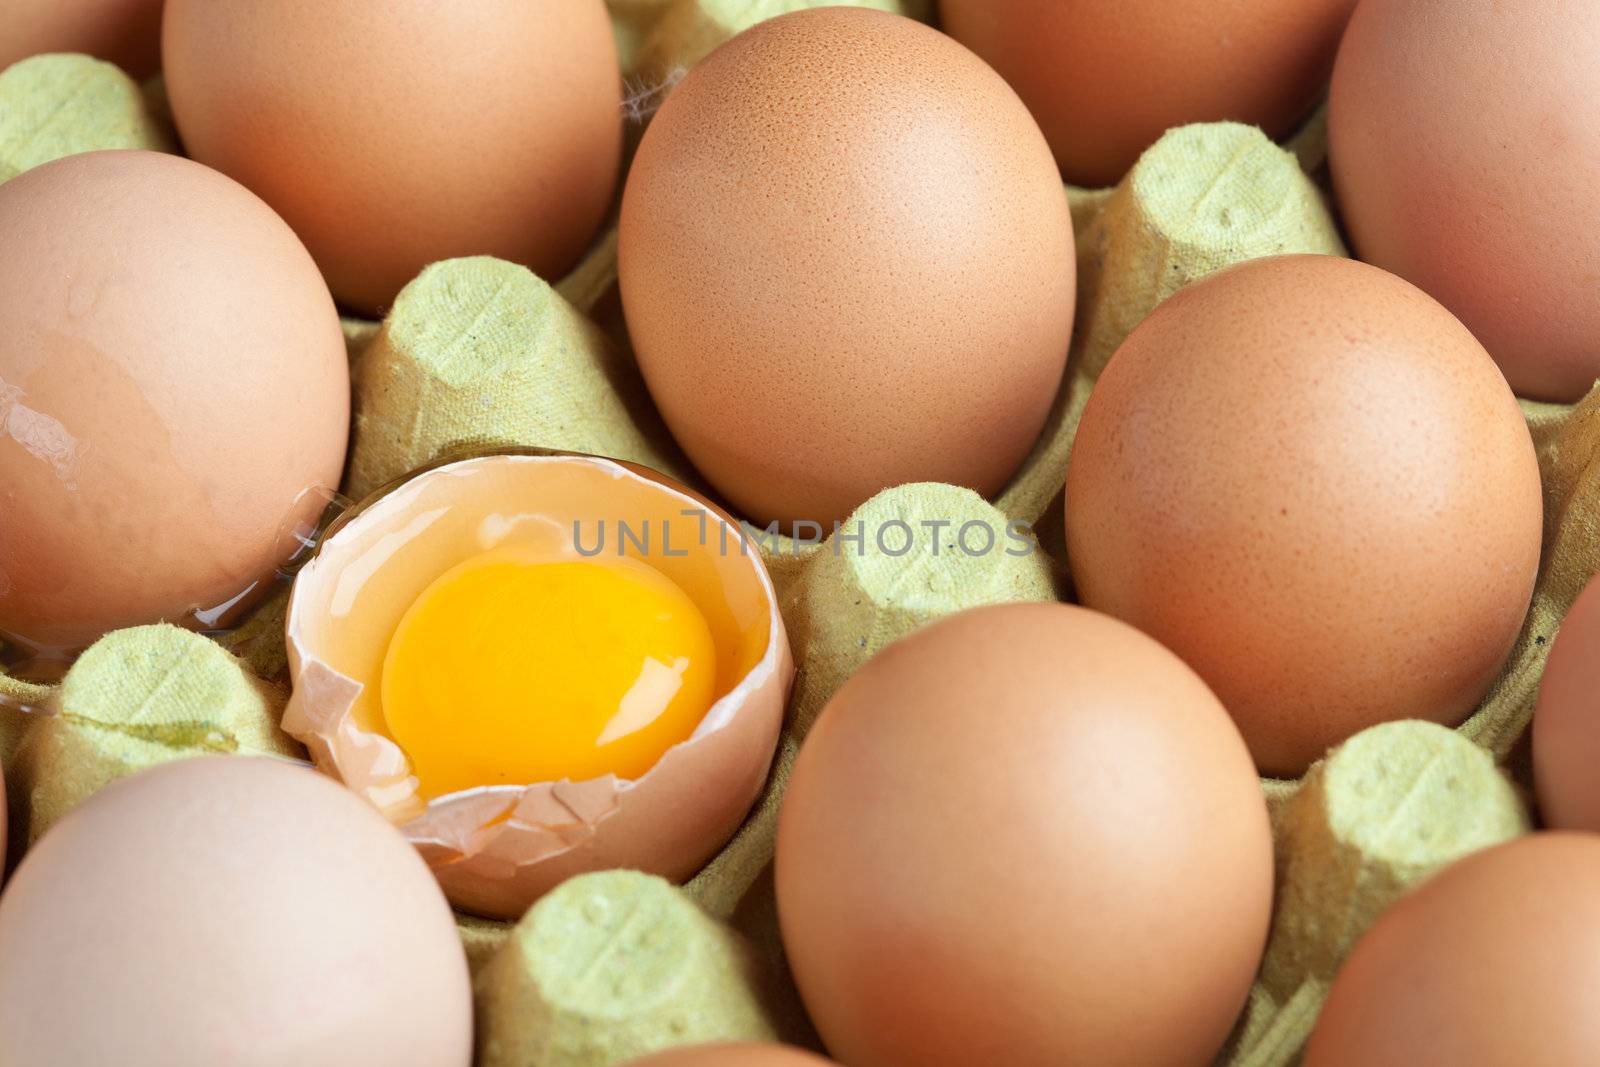 Box full of eggs with one broken egg in between